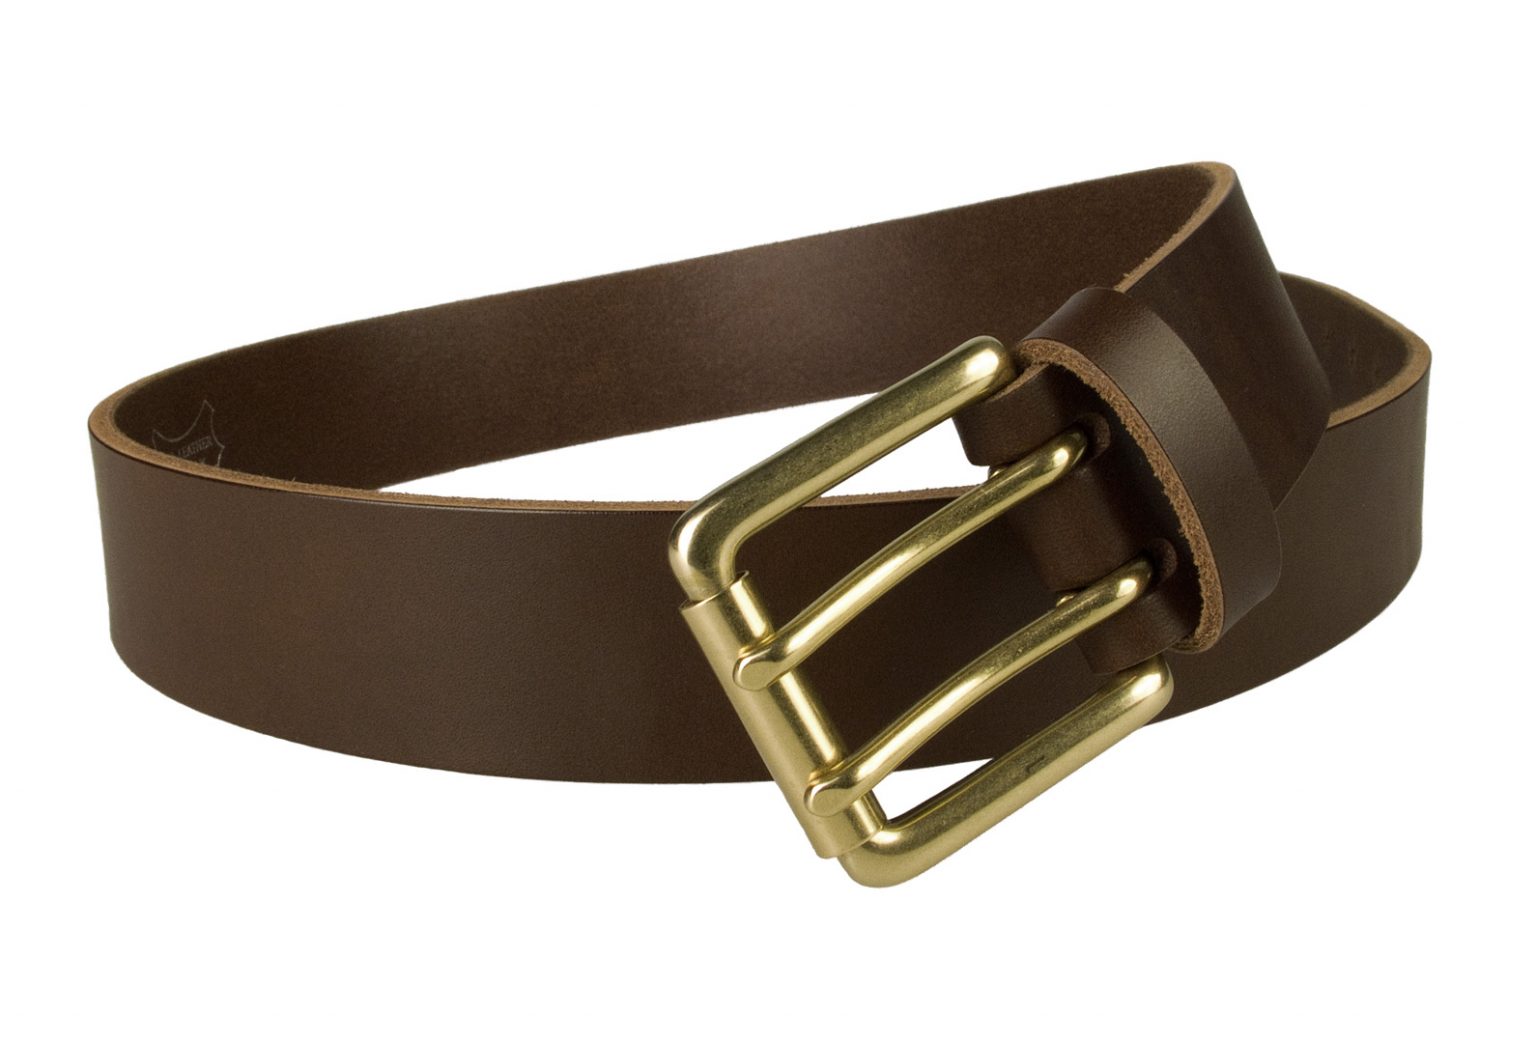 Brass Double Prong Leather Jeans Belt - Belt Designs